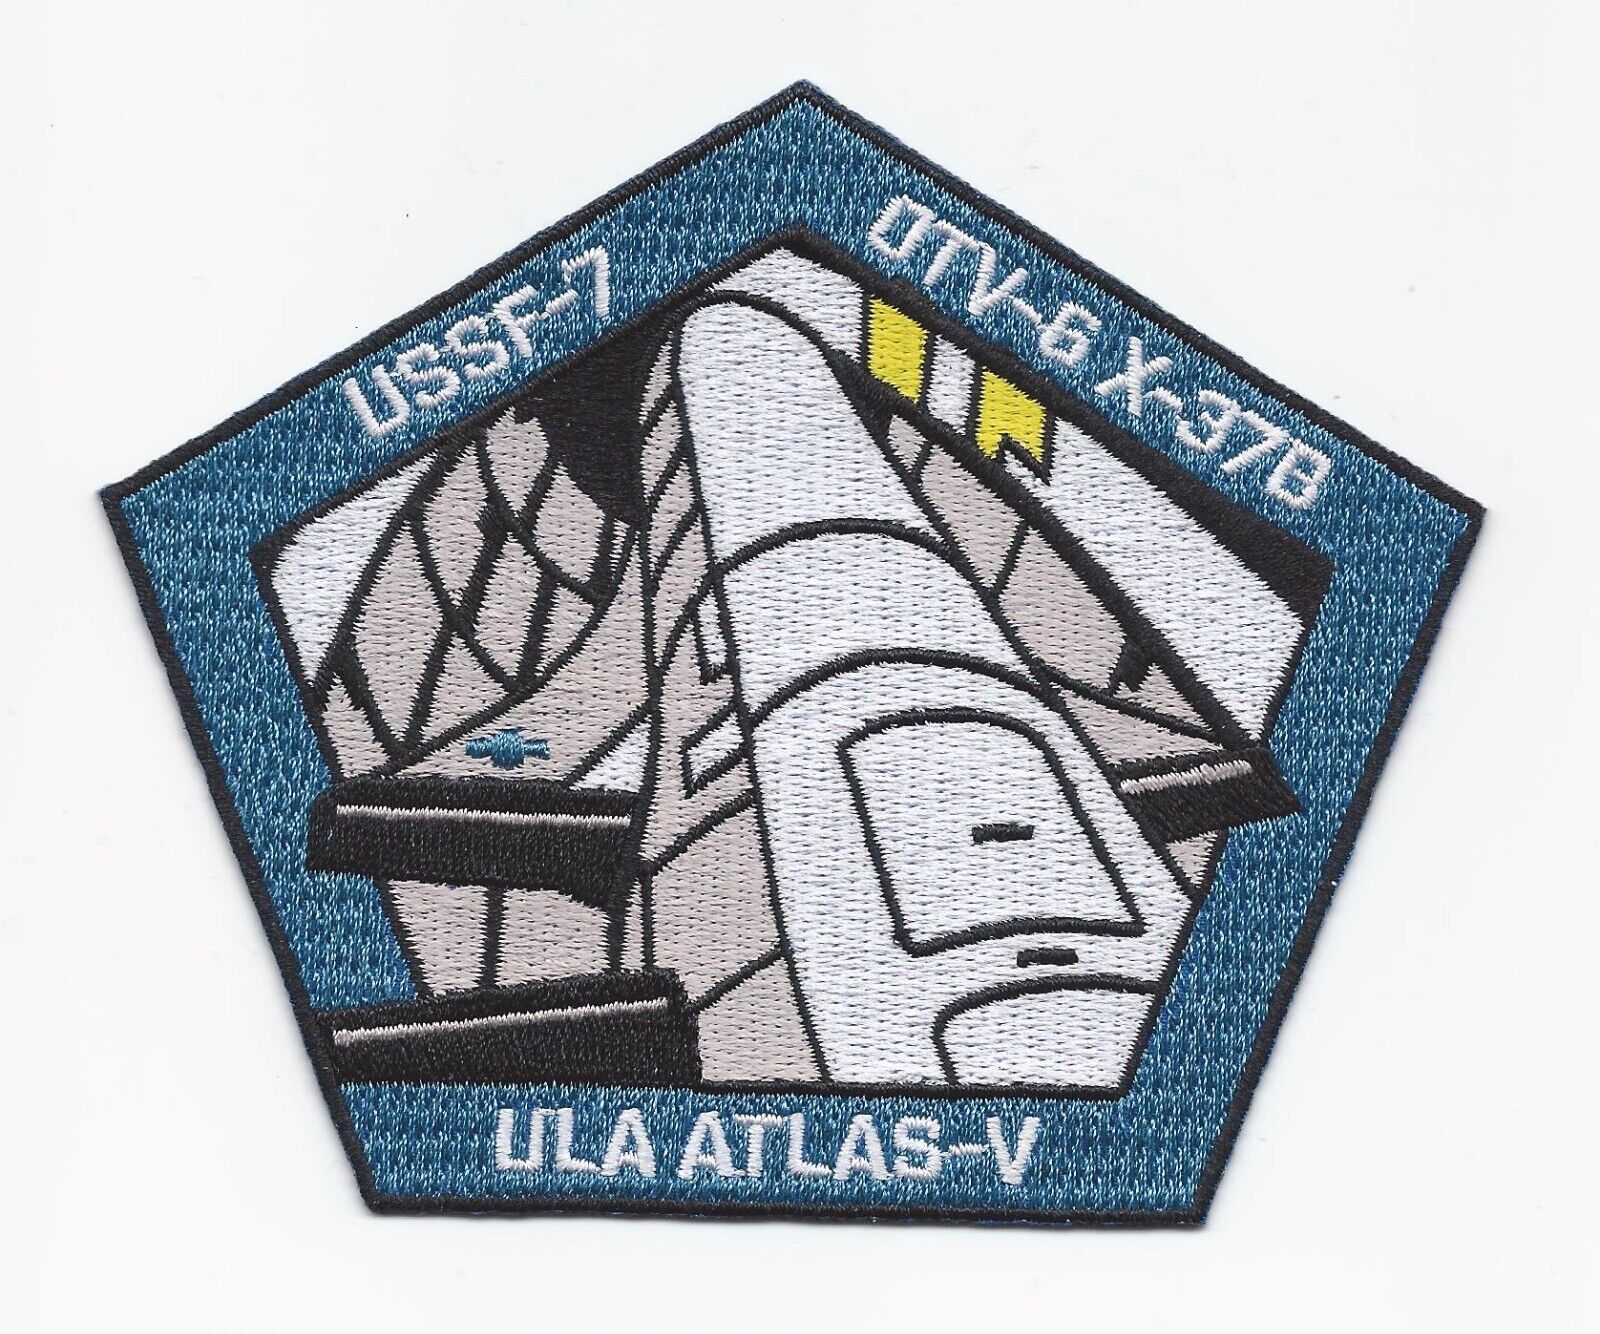 OTV-6 X-37B USSF-7 ORBITAL TEST ATLAS V ULA CCSFS USAF SATELLITE LAUNCH PATCH